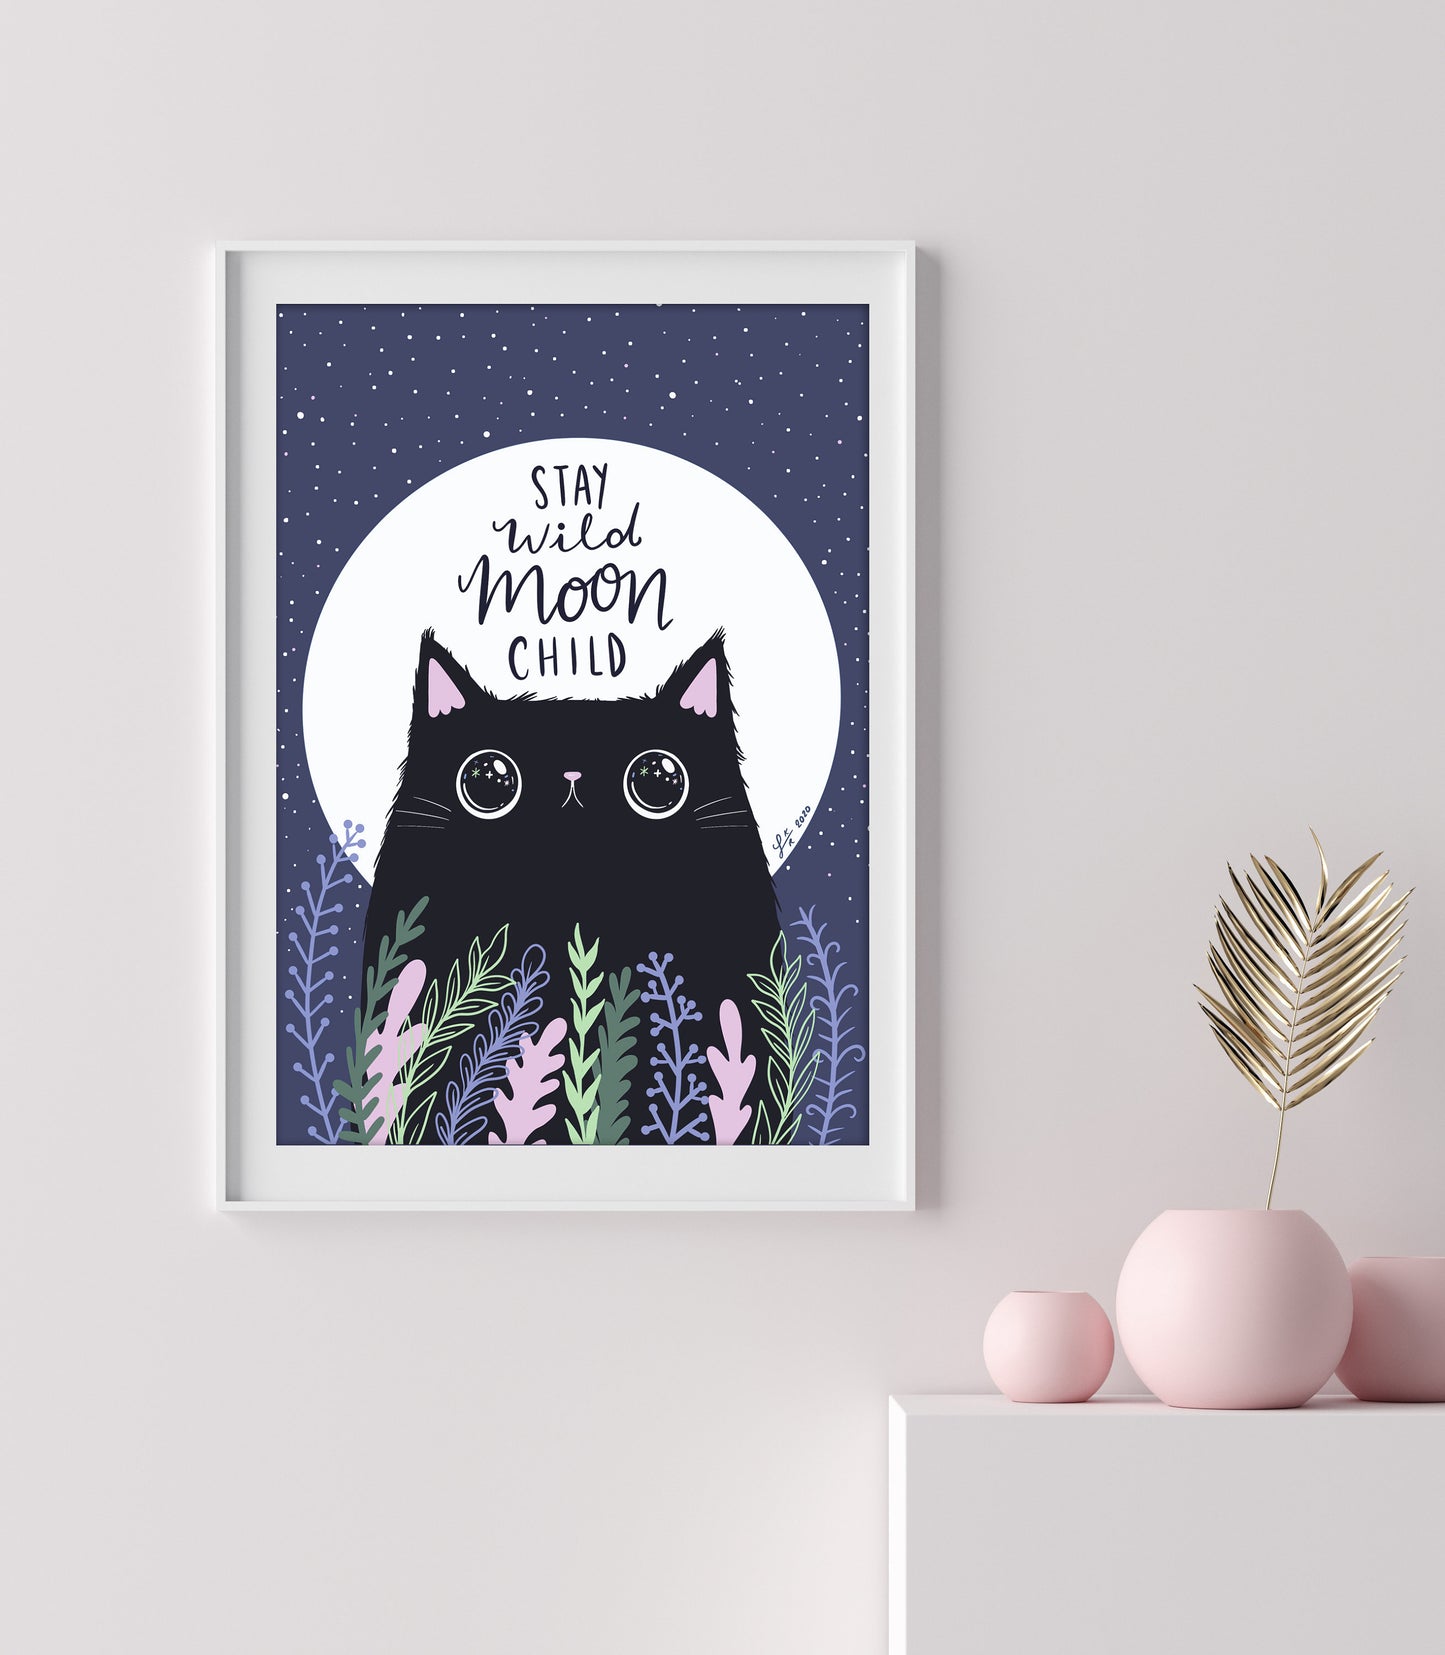 Stay wild moon child - Cute Cat Art Print